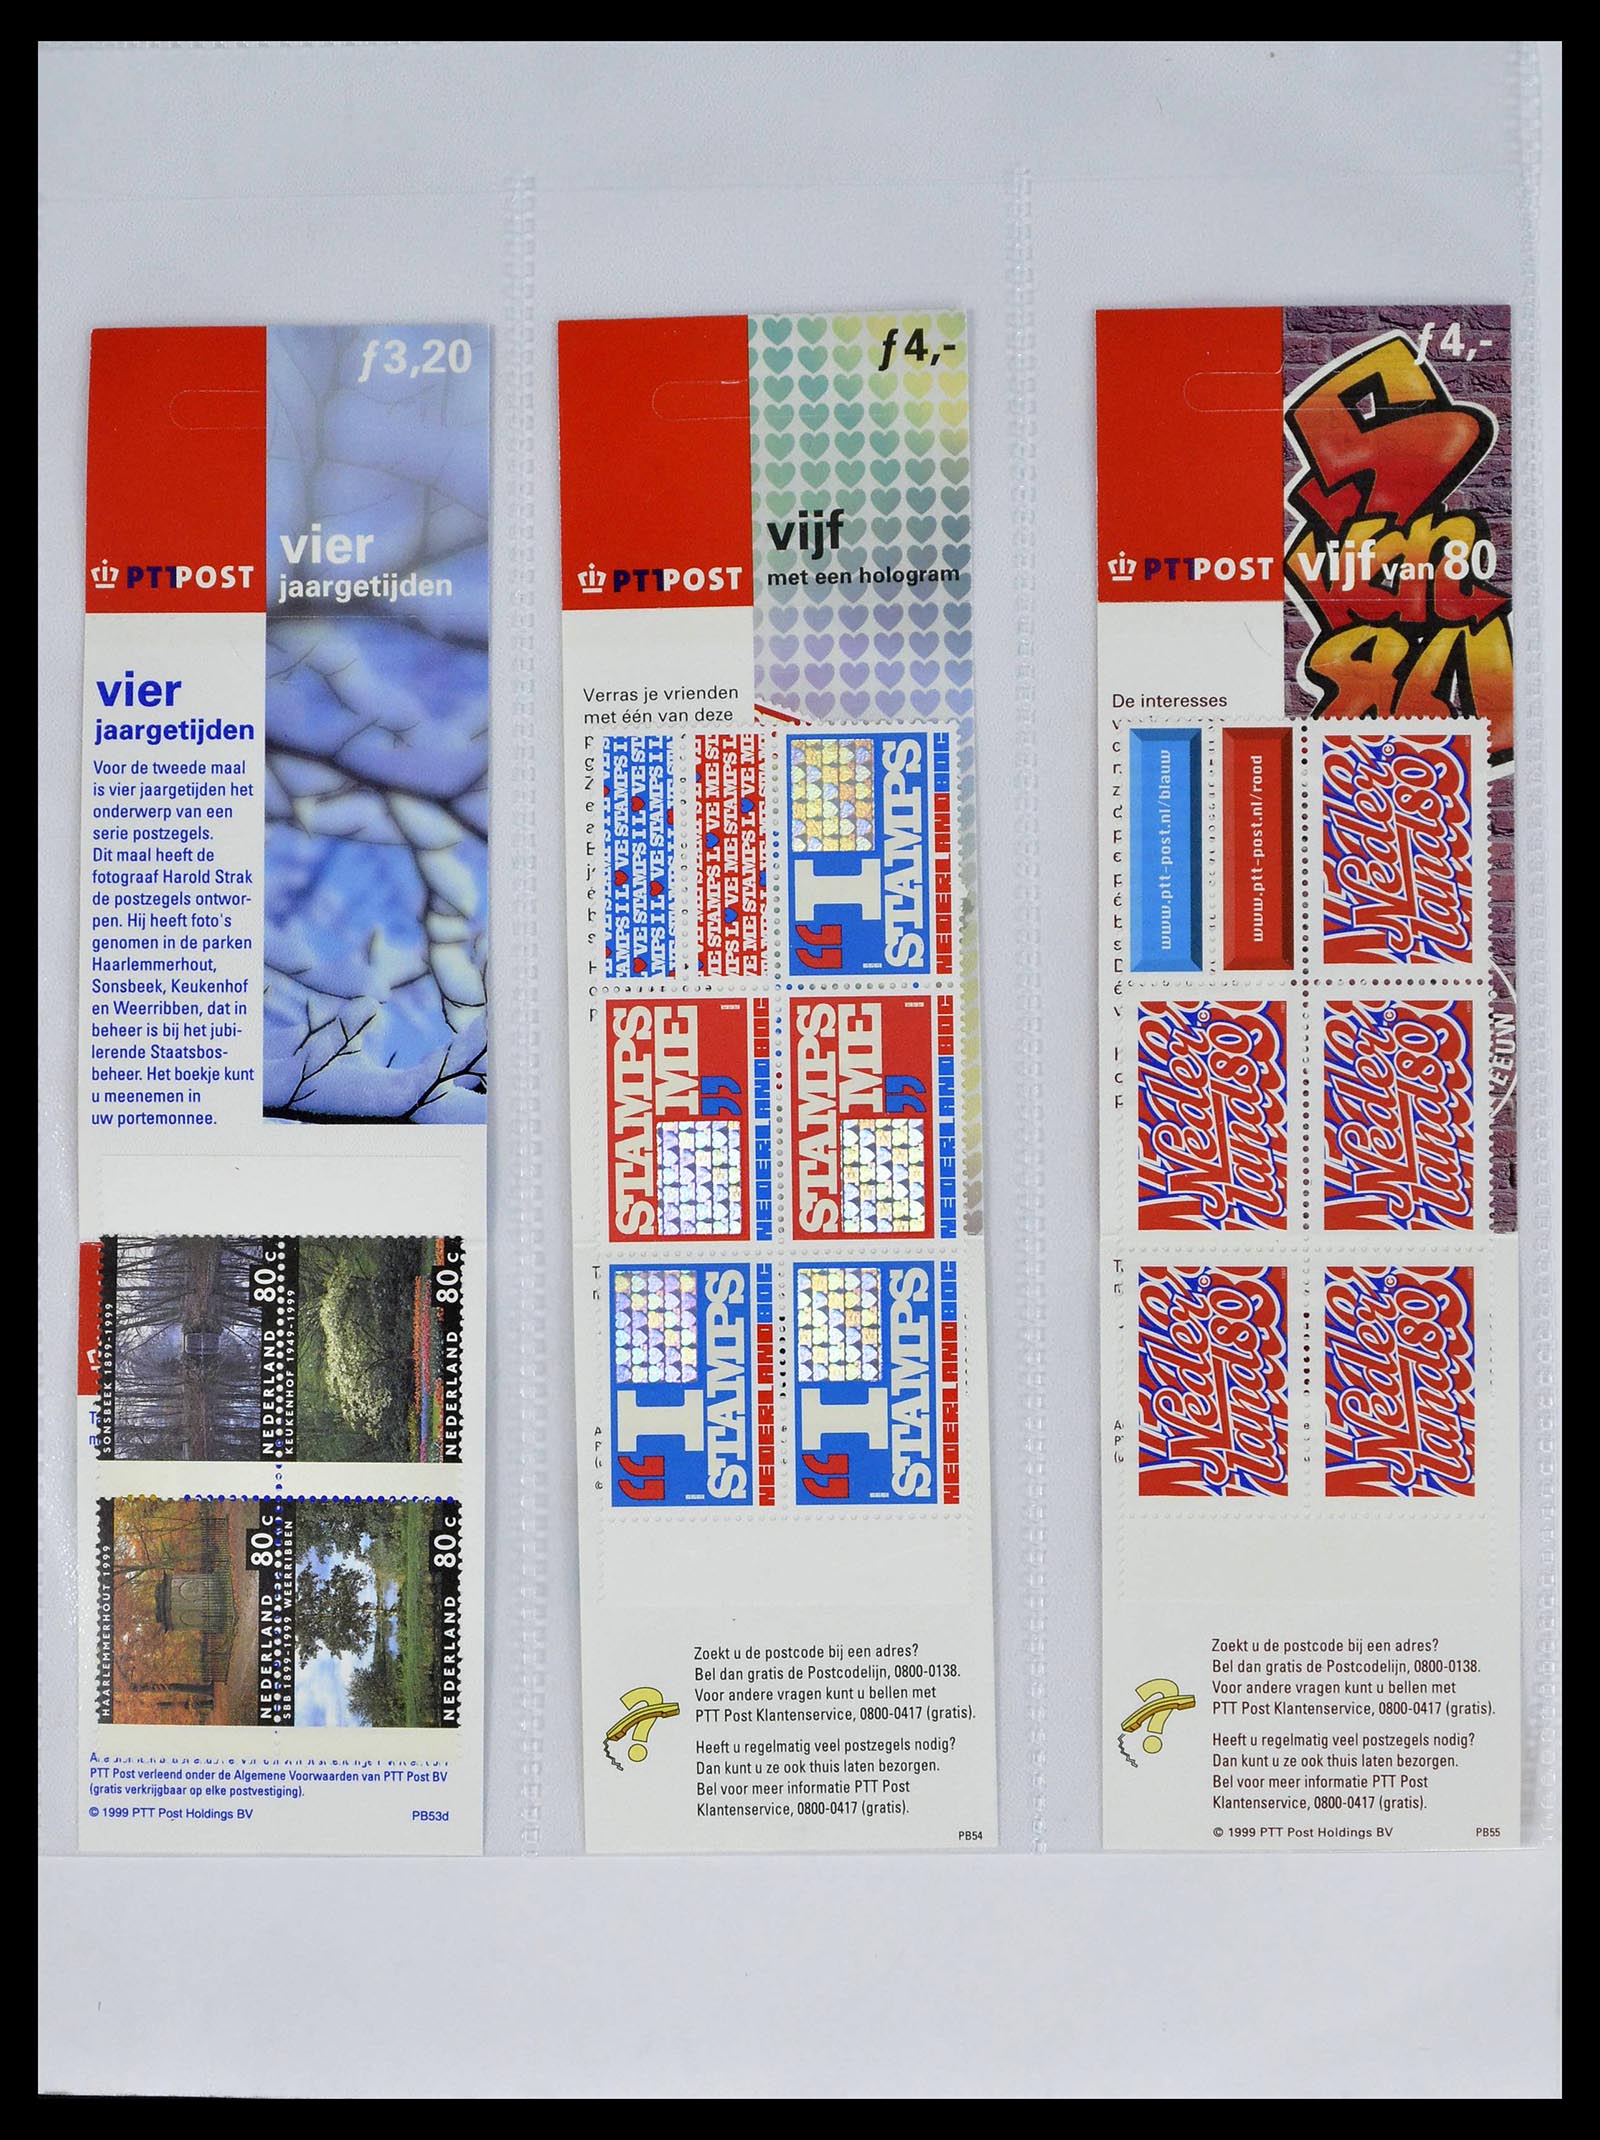 39362 0032 - Stamp collection 39362 Netherlands stamp booklets 1964-2003.